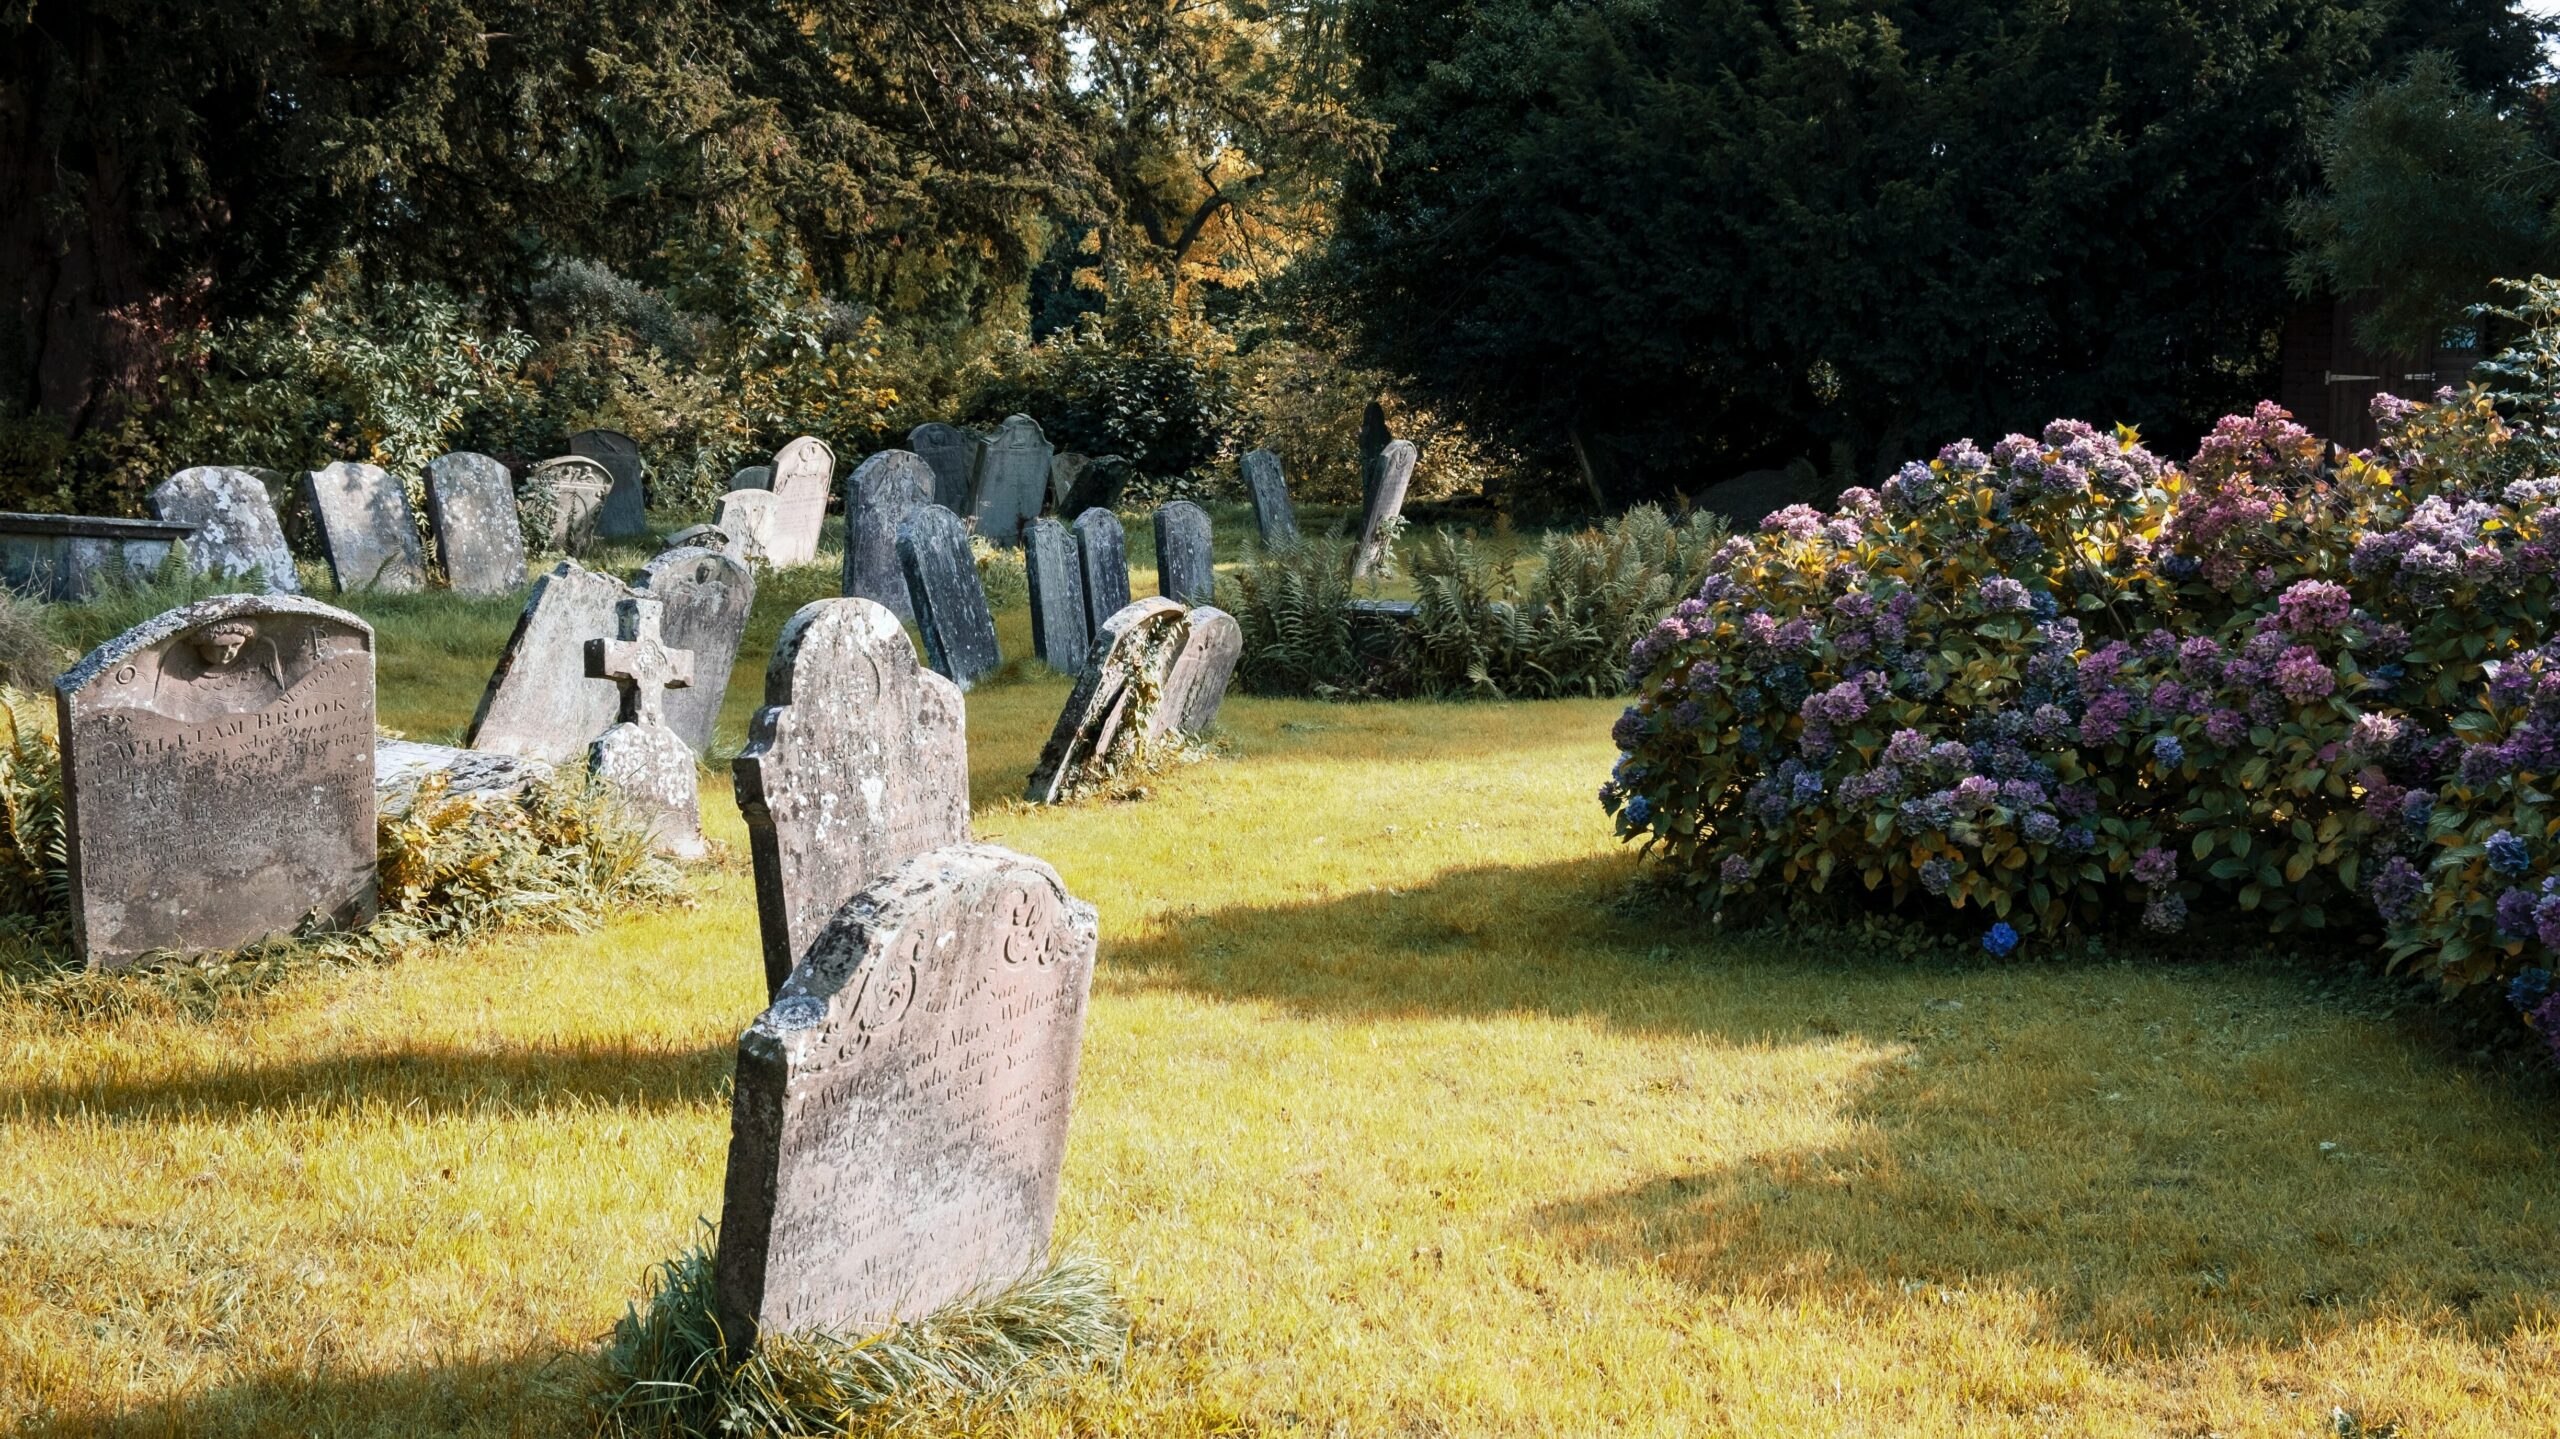 Headstones and purple flowers in a graveyard